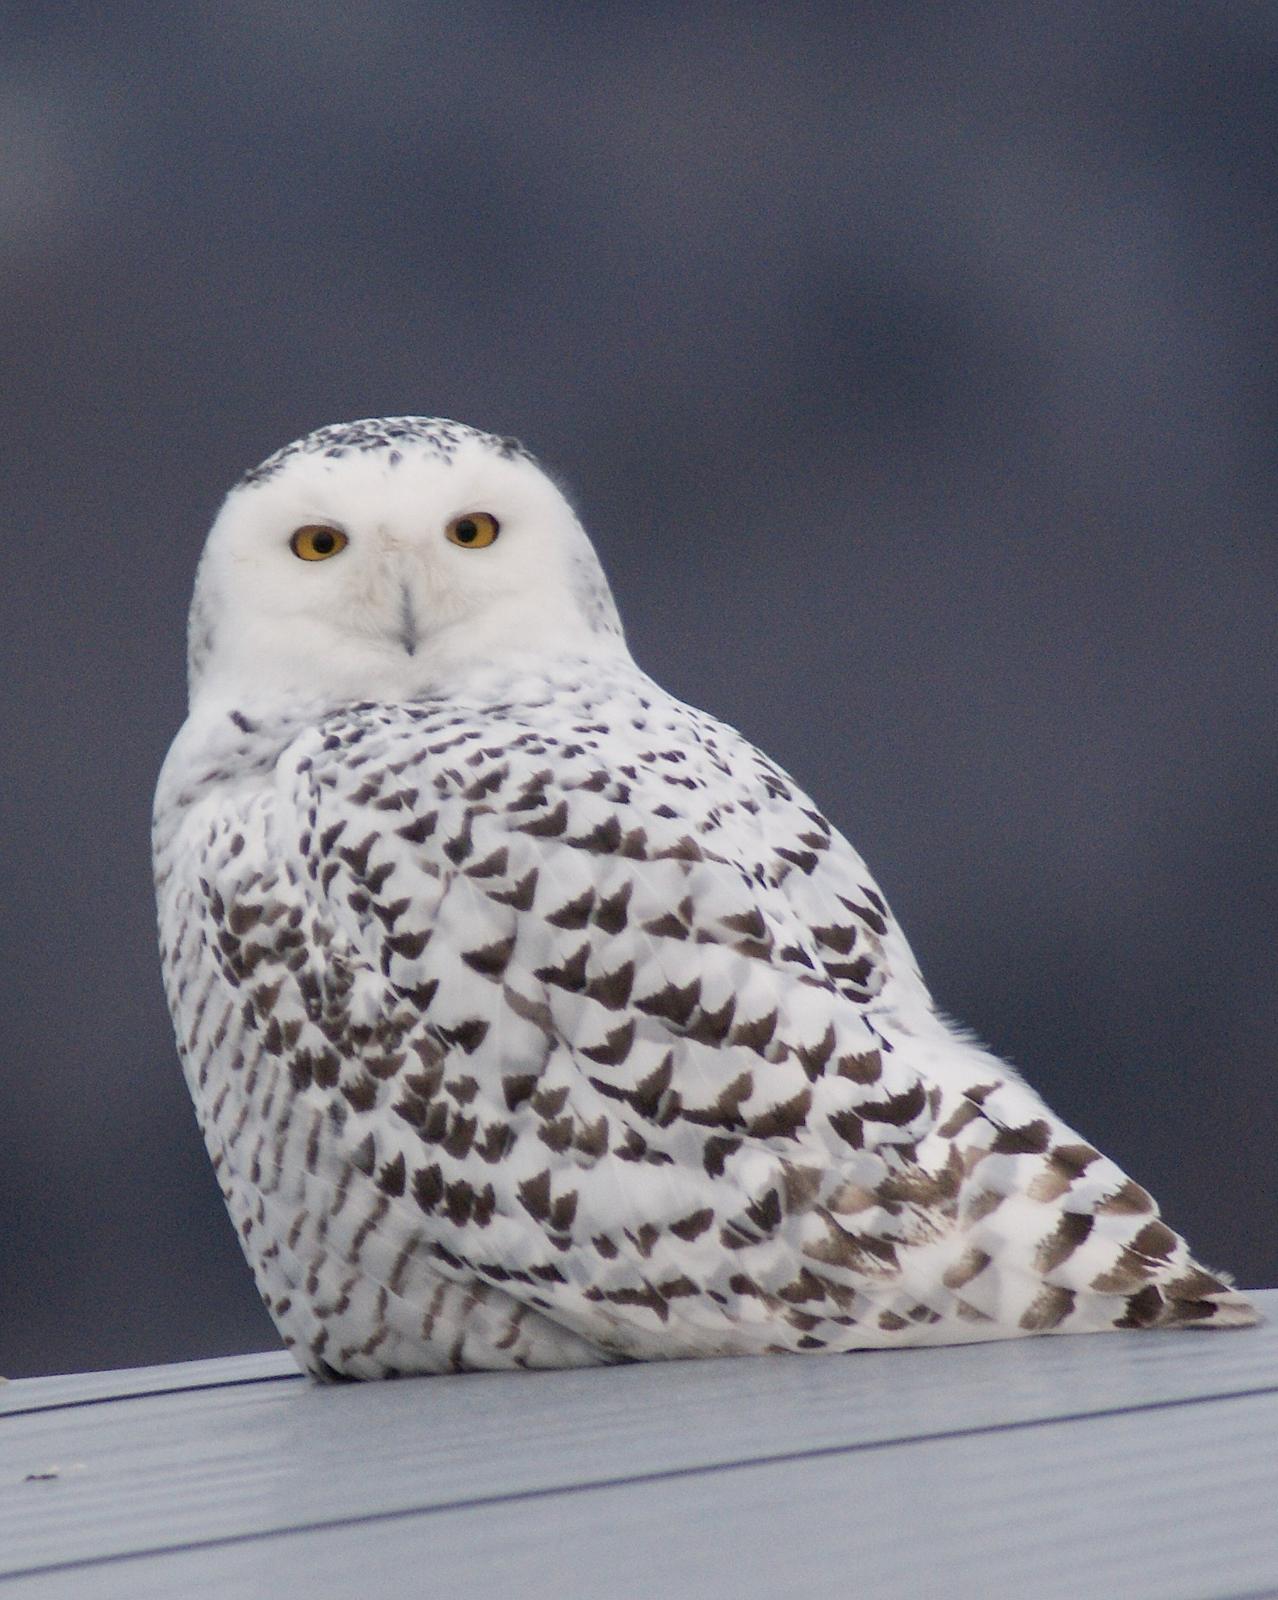 Snowy Owl Photo by Gerald Hoekstra